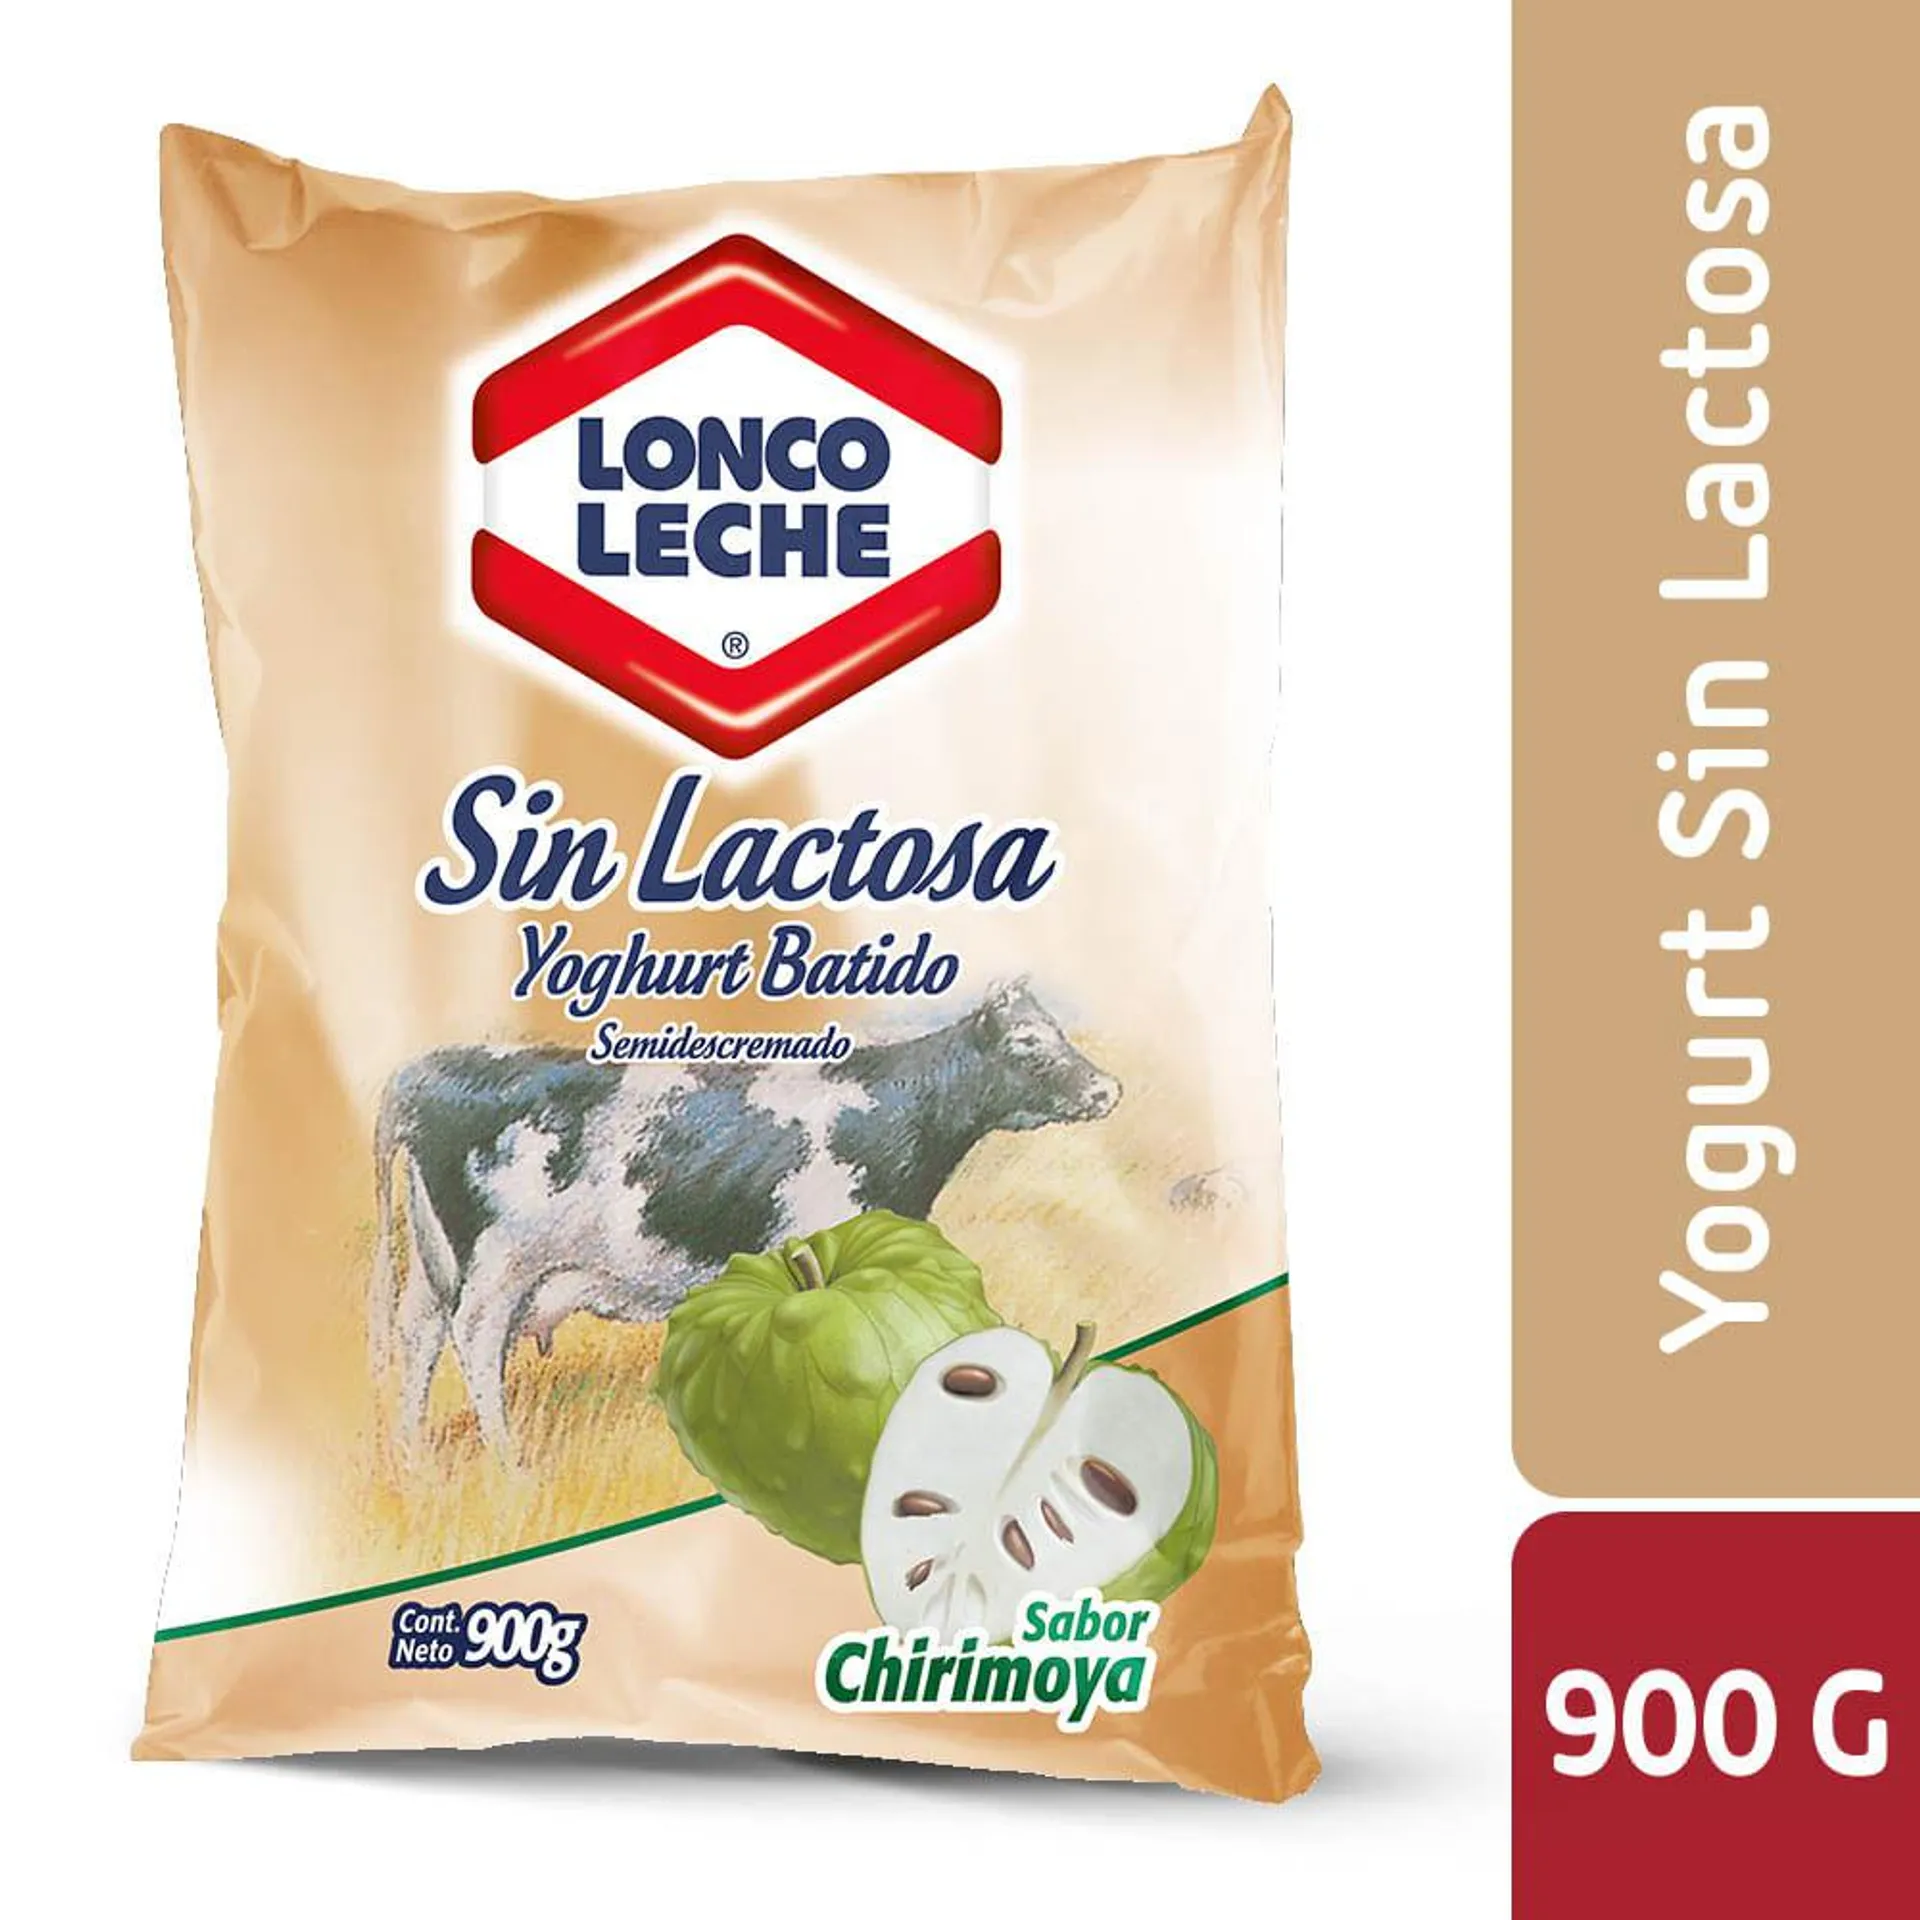 Yoghurt Loncoleche sin lactosa chirimoya bolsa 900 g